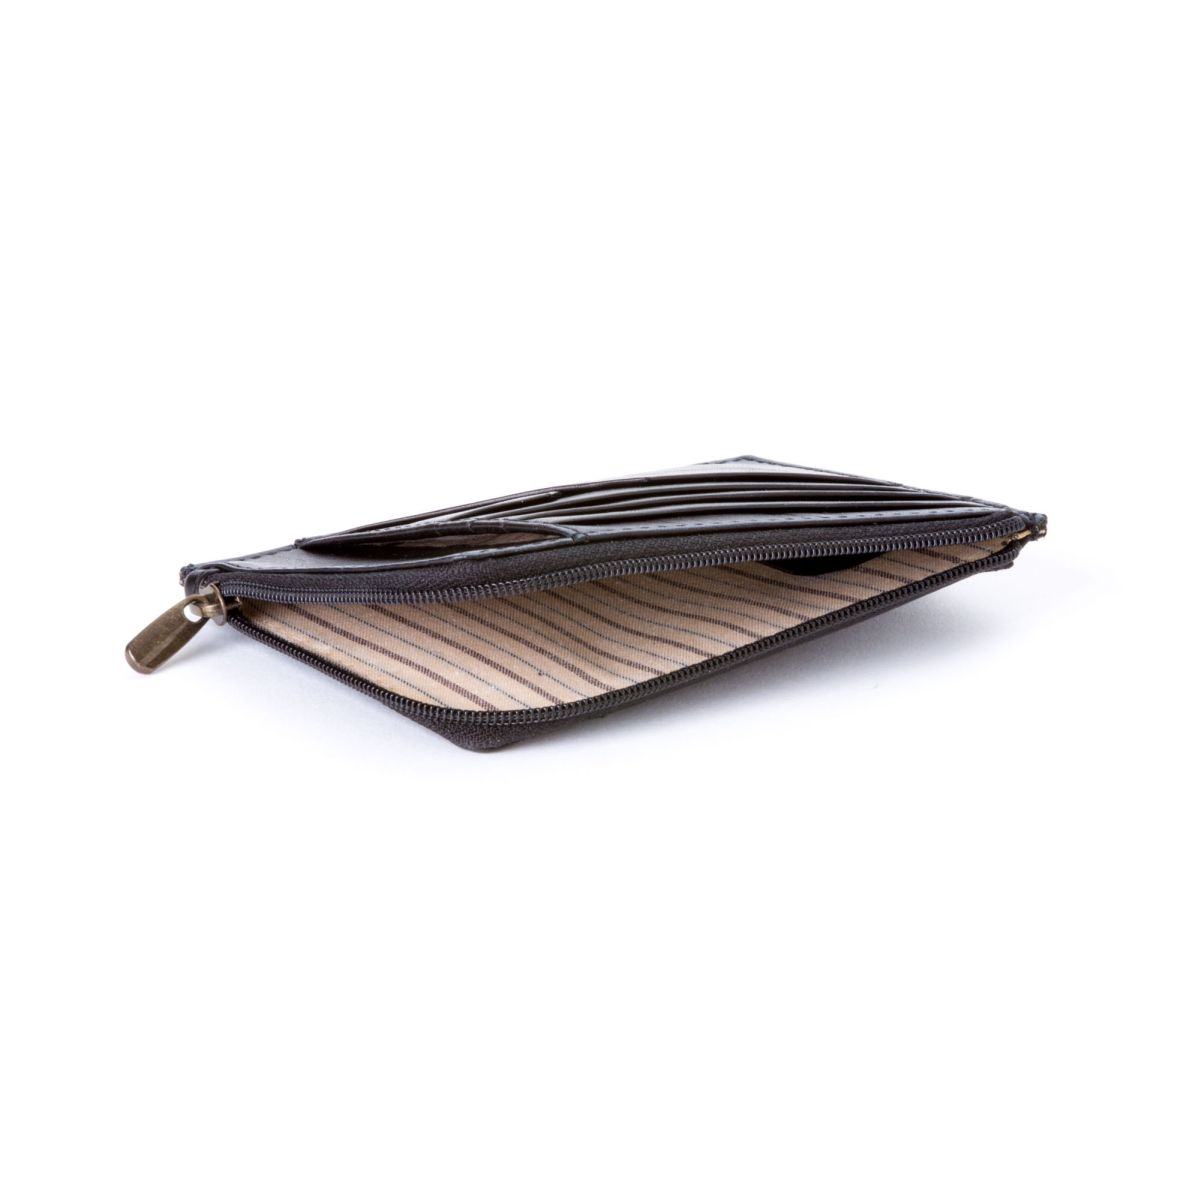 DuDu Flat Leather Wallet - Black